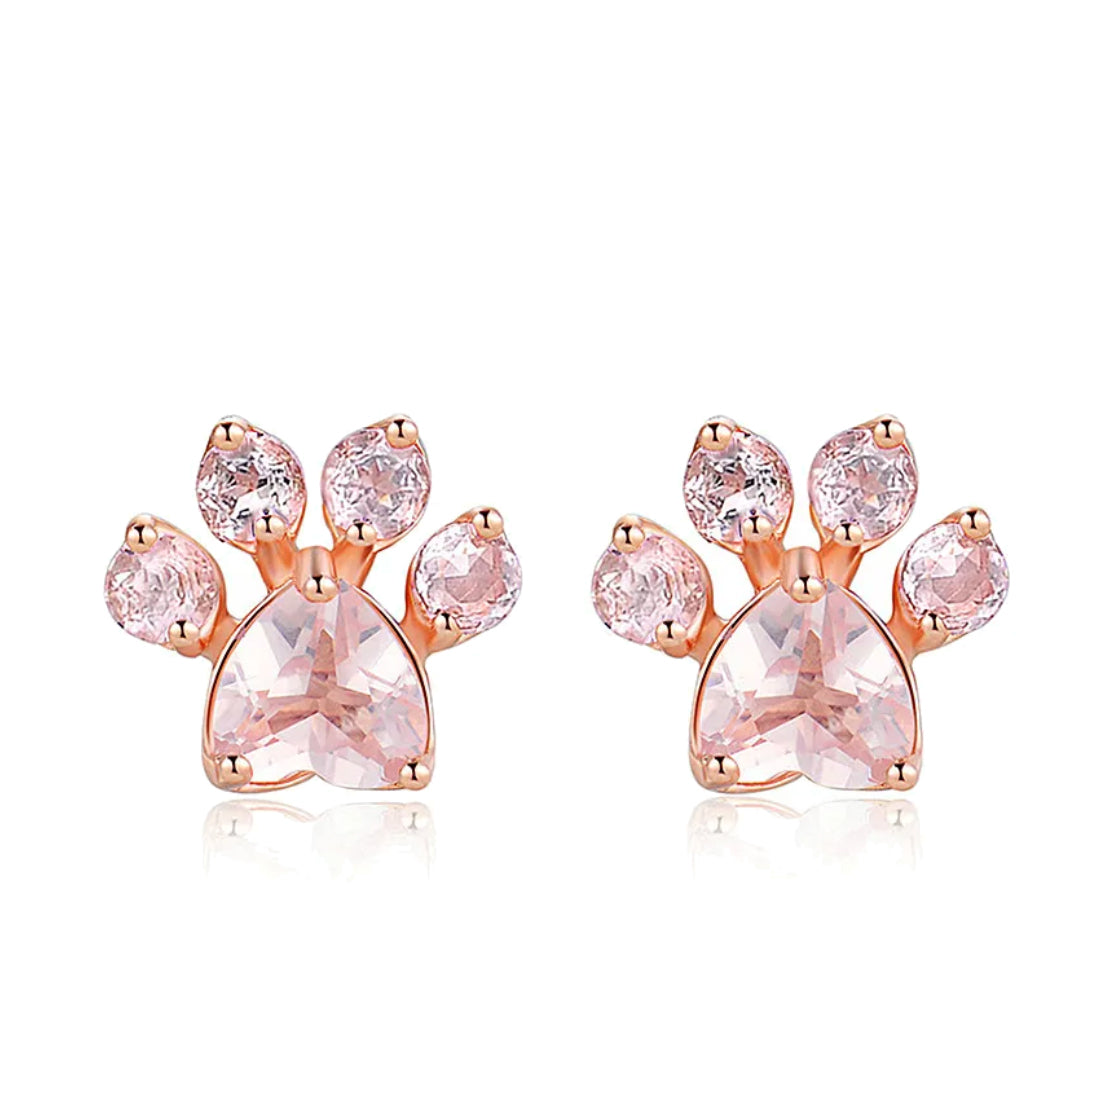 Diamanté Paw Print Earrings - Rose Gold